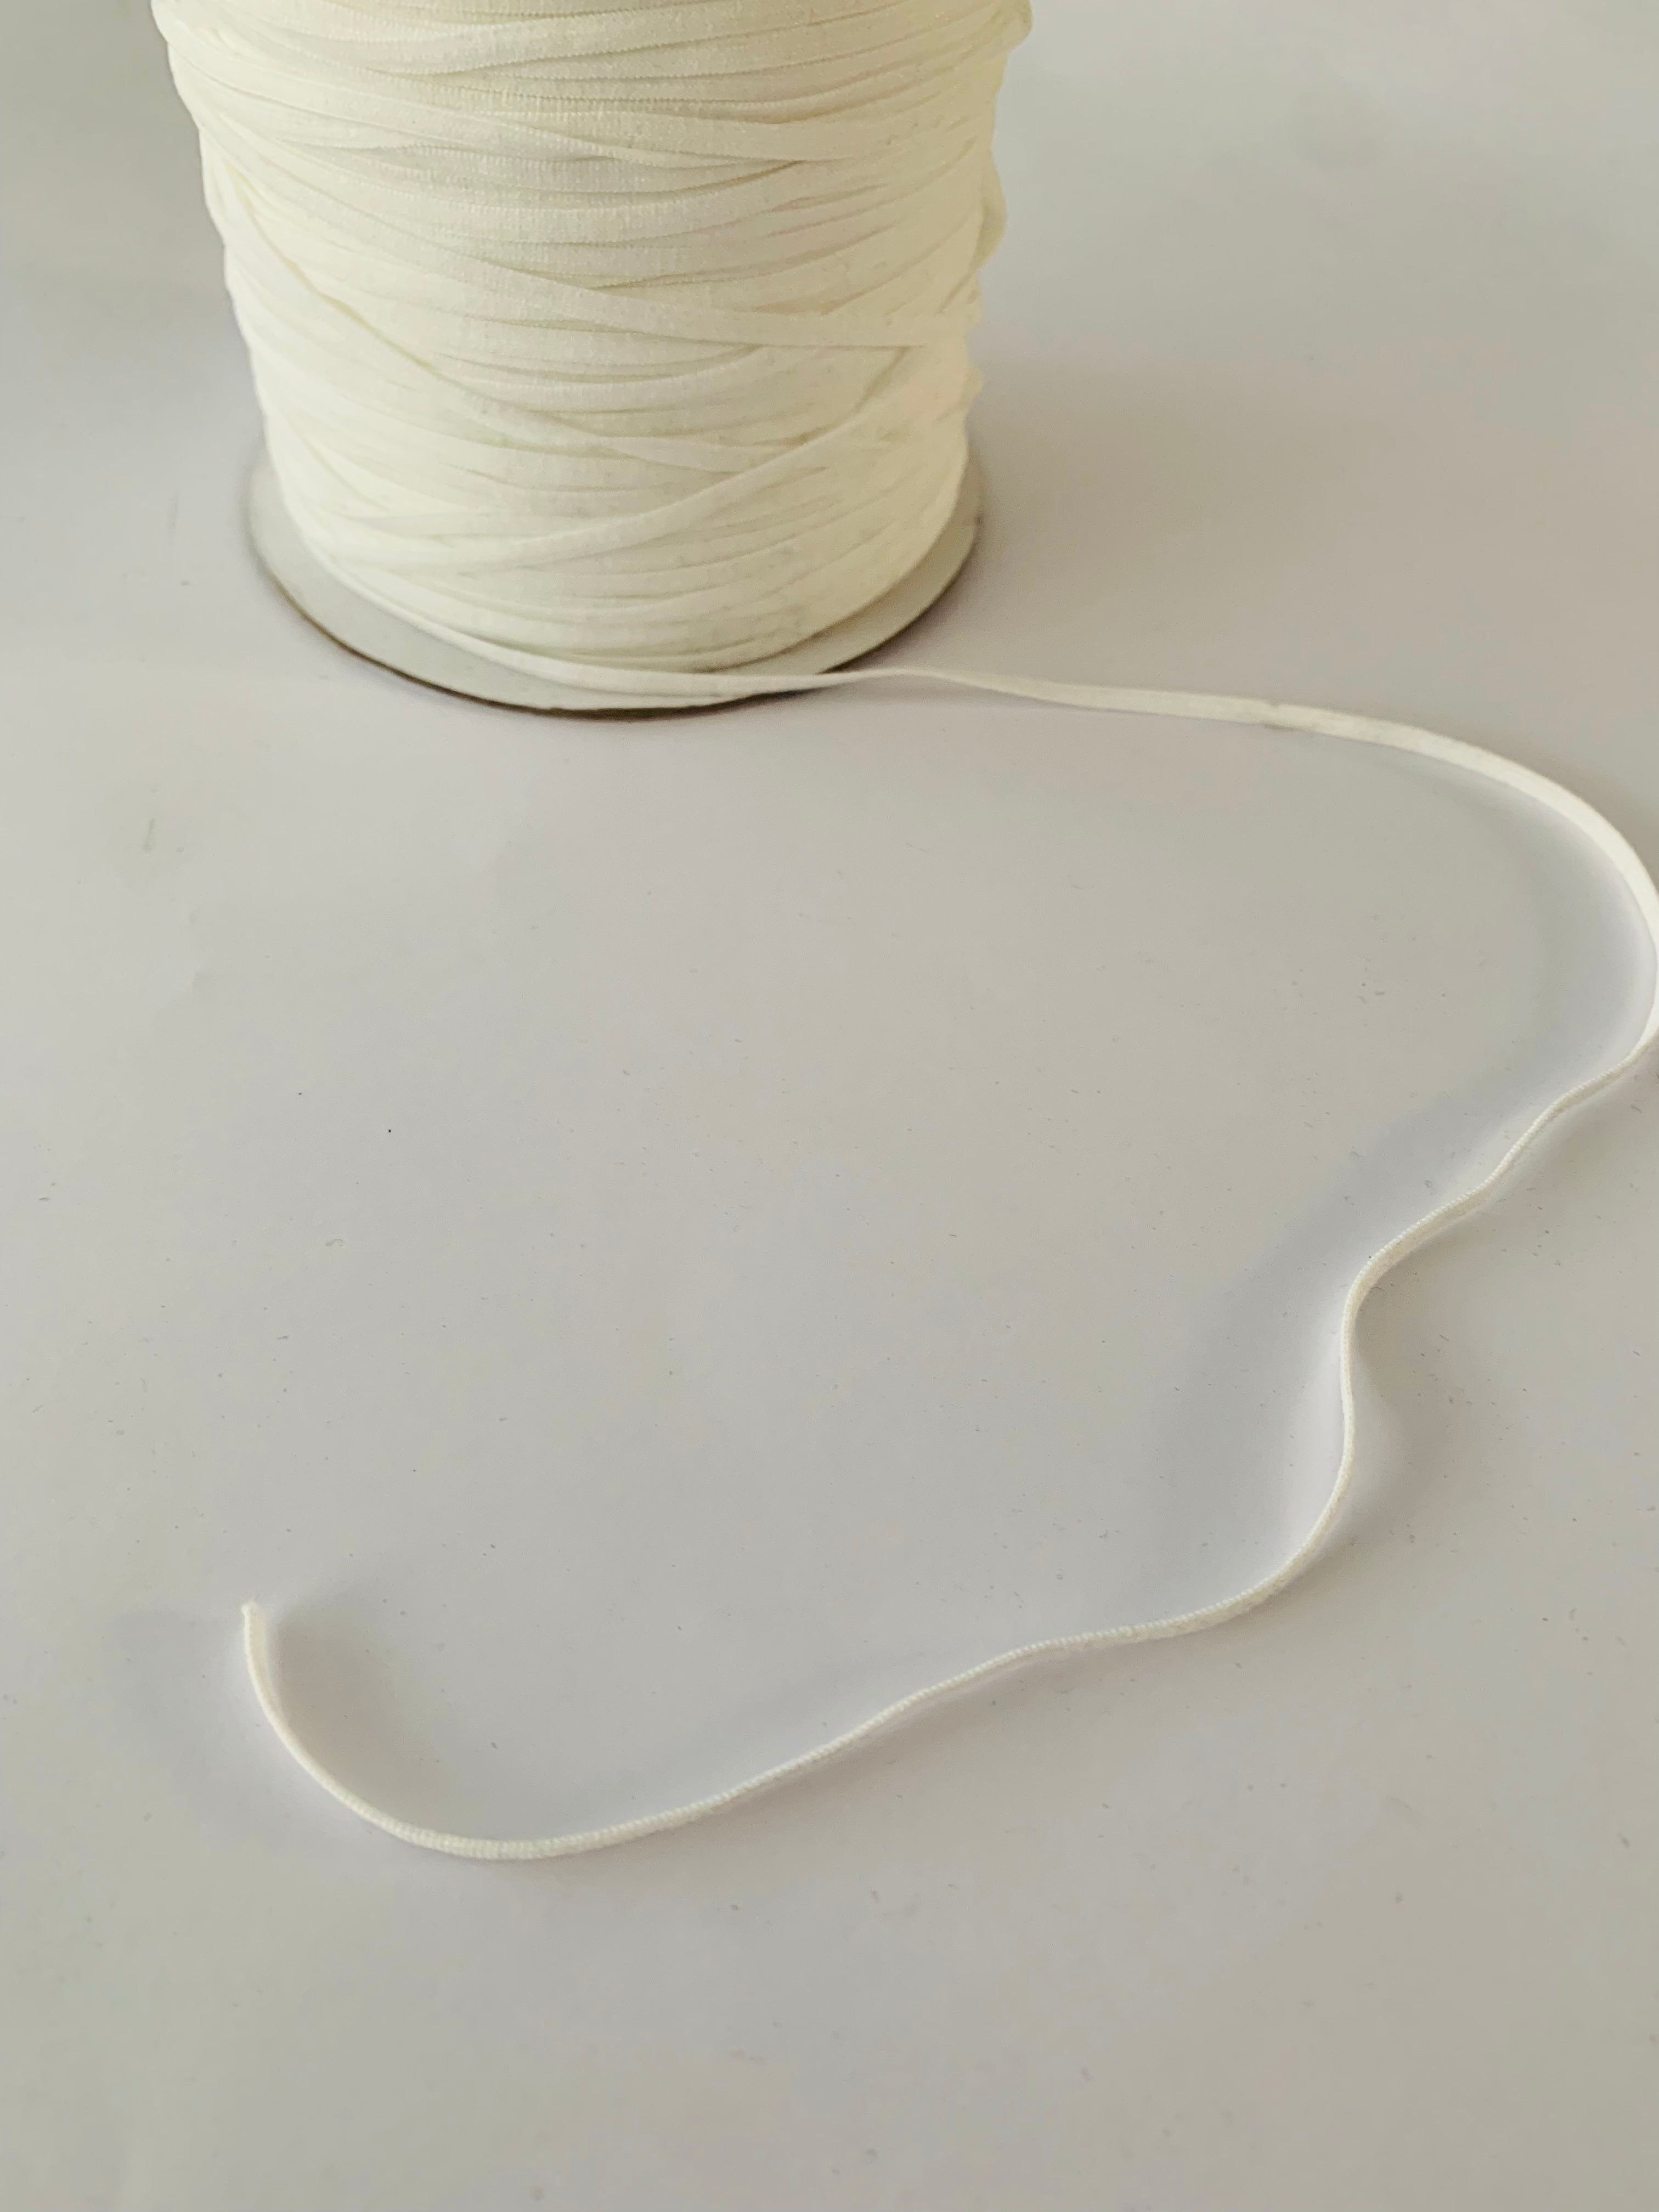 Elastic: Soft braided flat 3mm in white